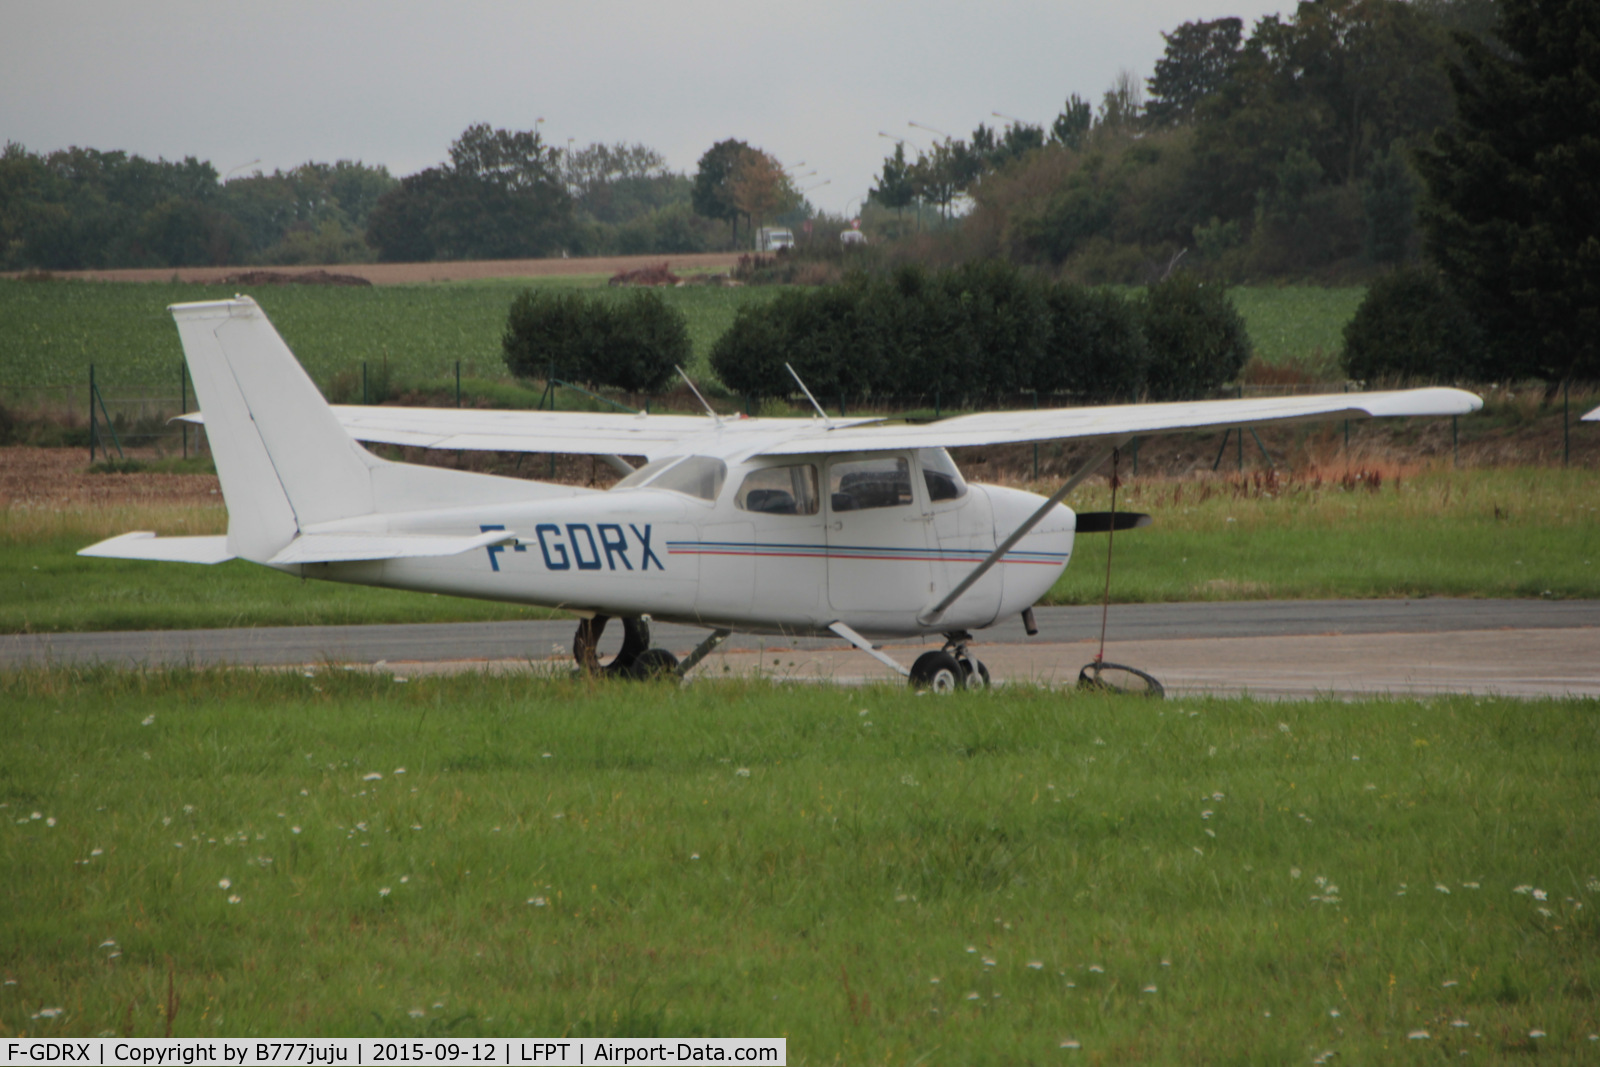 F-GDRX, 1973 Reims F172M Skyhawk C/N 0969, at Pontoise